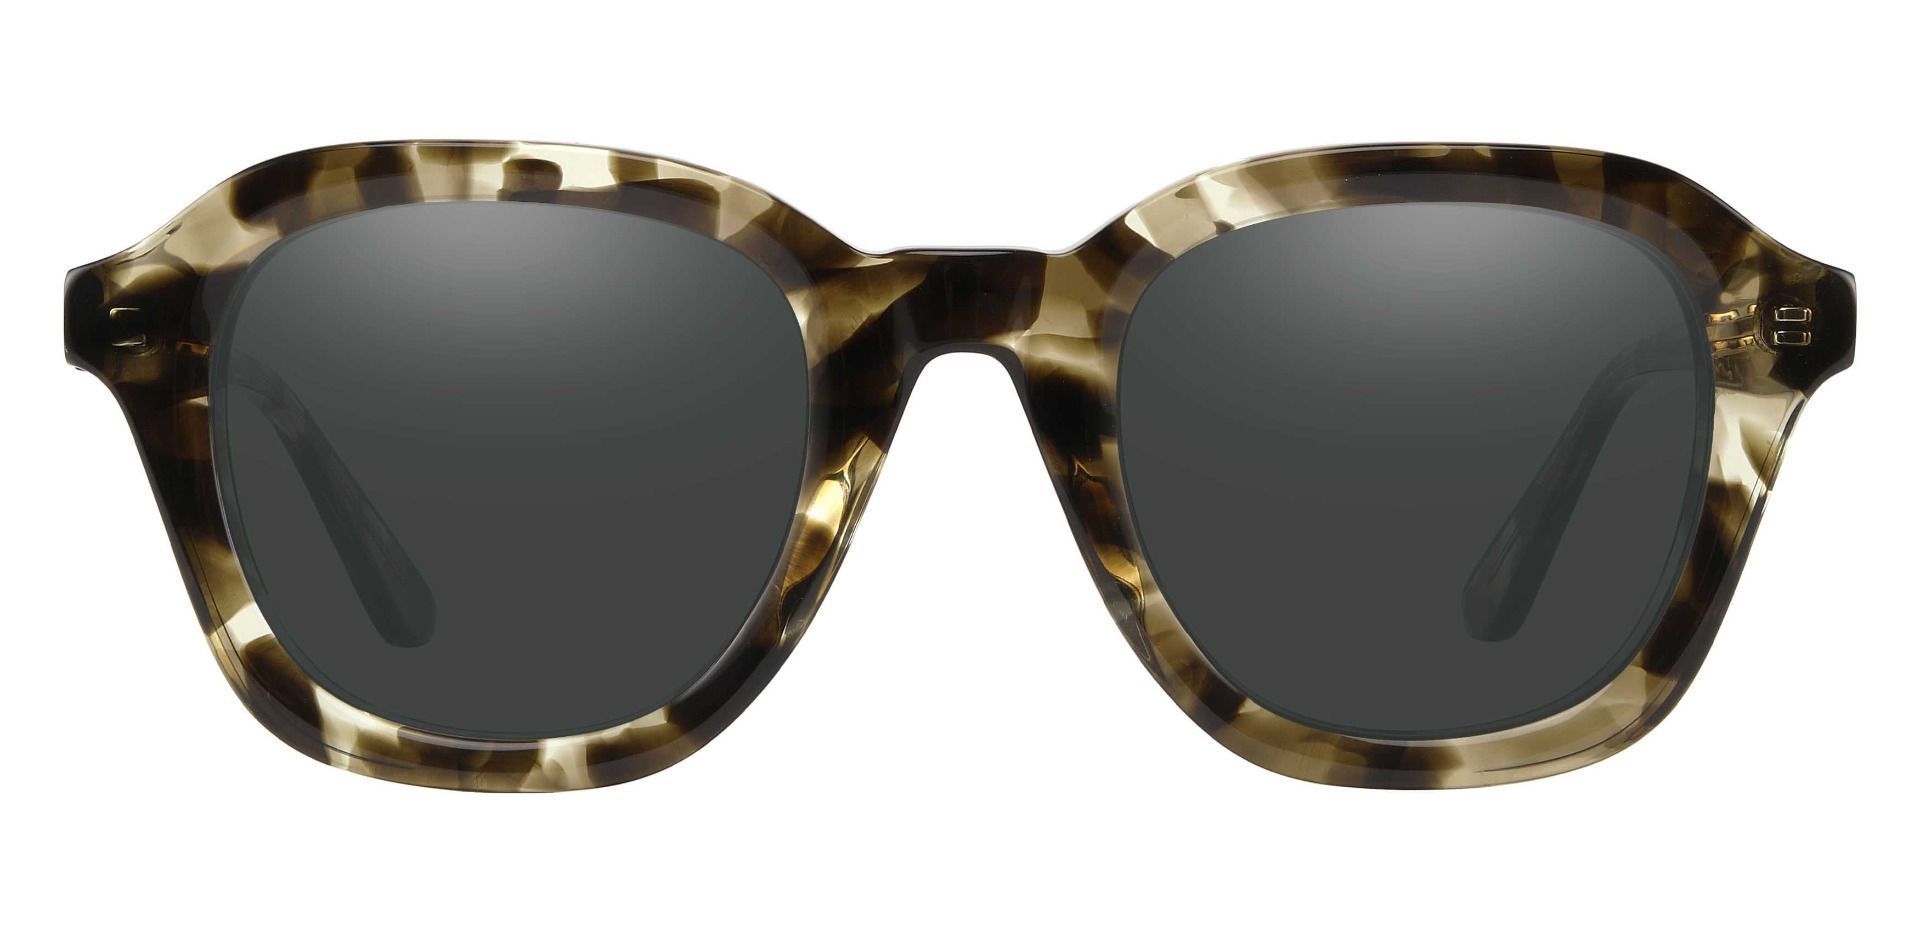 Grove Square Progressive Sunglasses - Green Frame With Gray Lenses